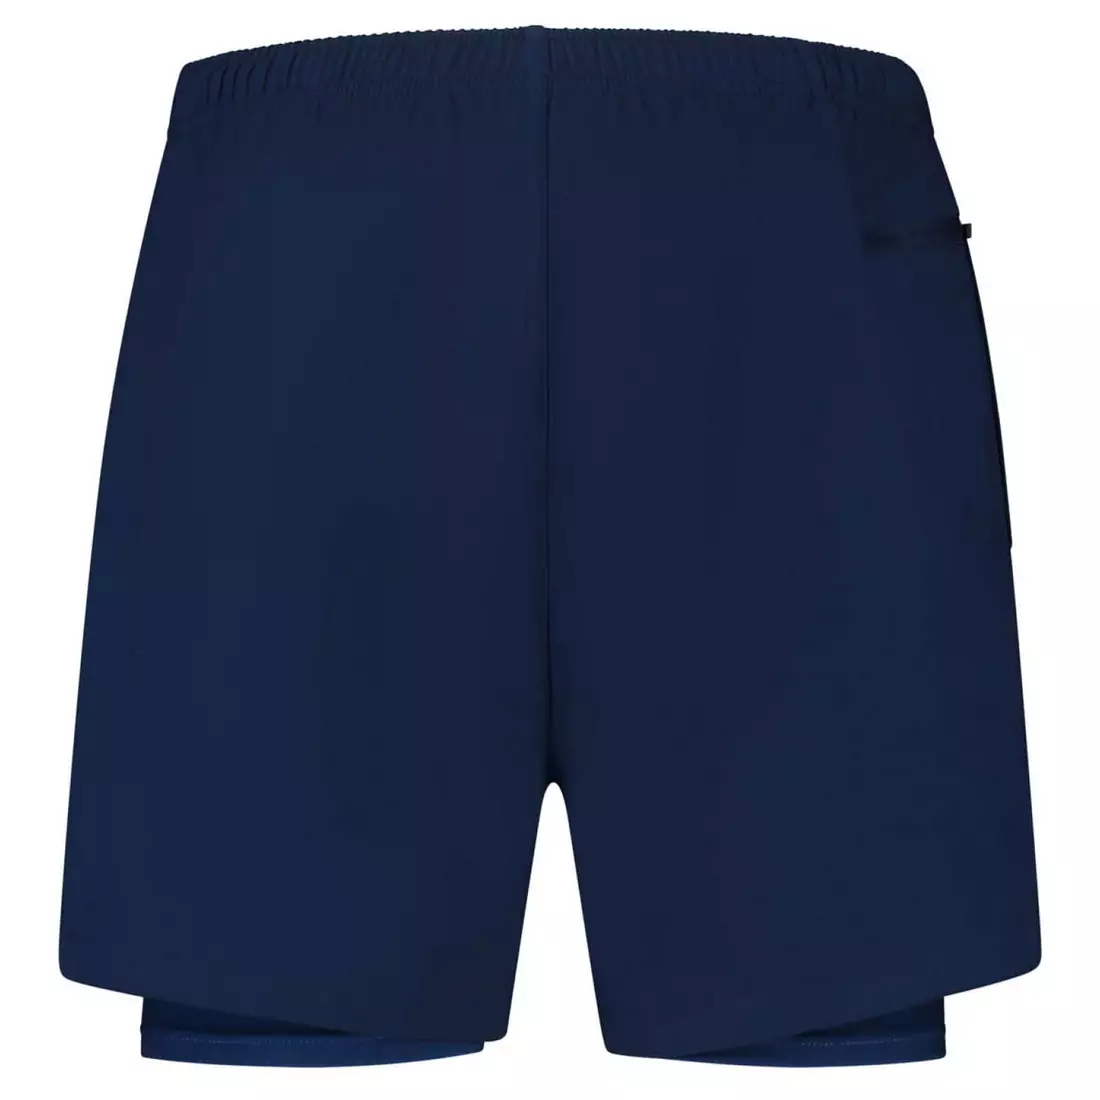 ROGELLI ESSENTIAL men's 2in1 running shorts, blue